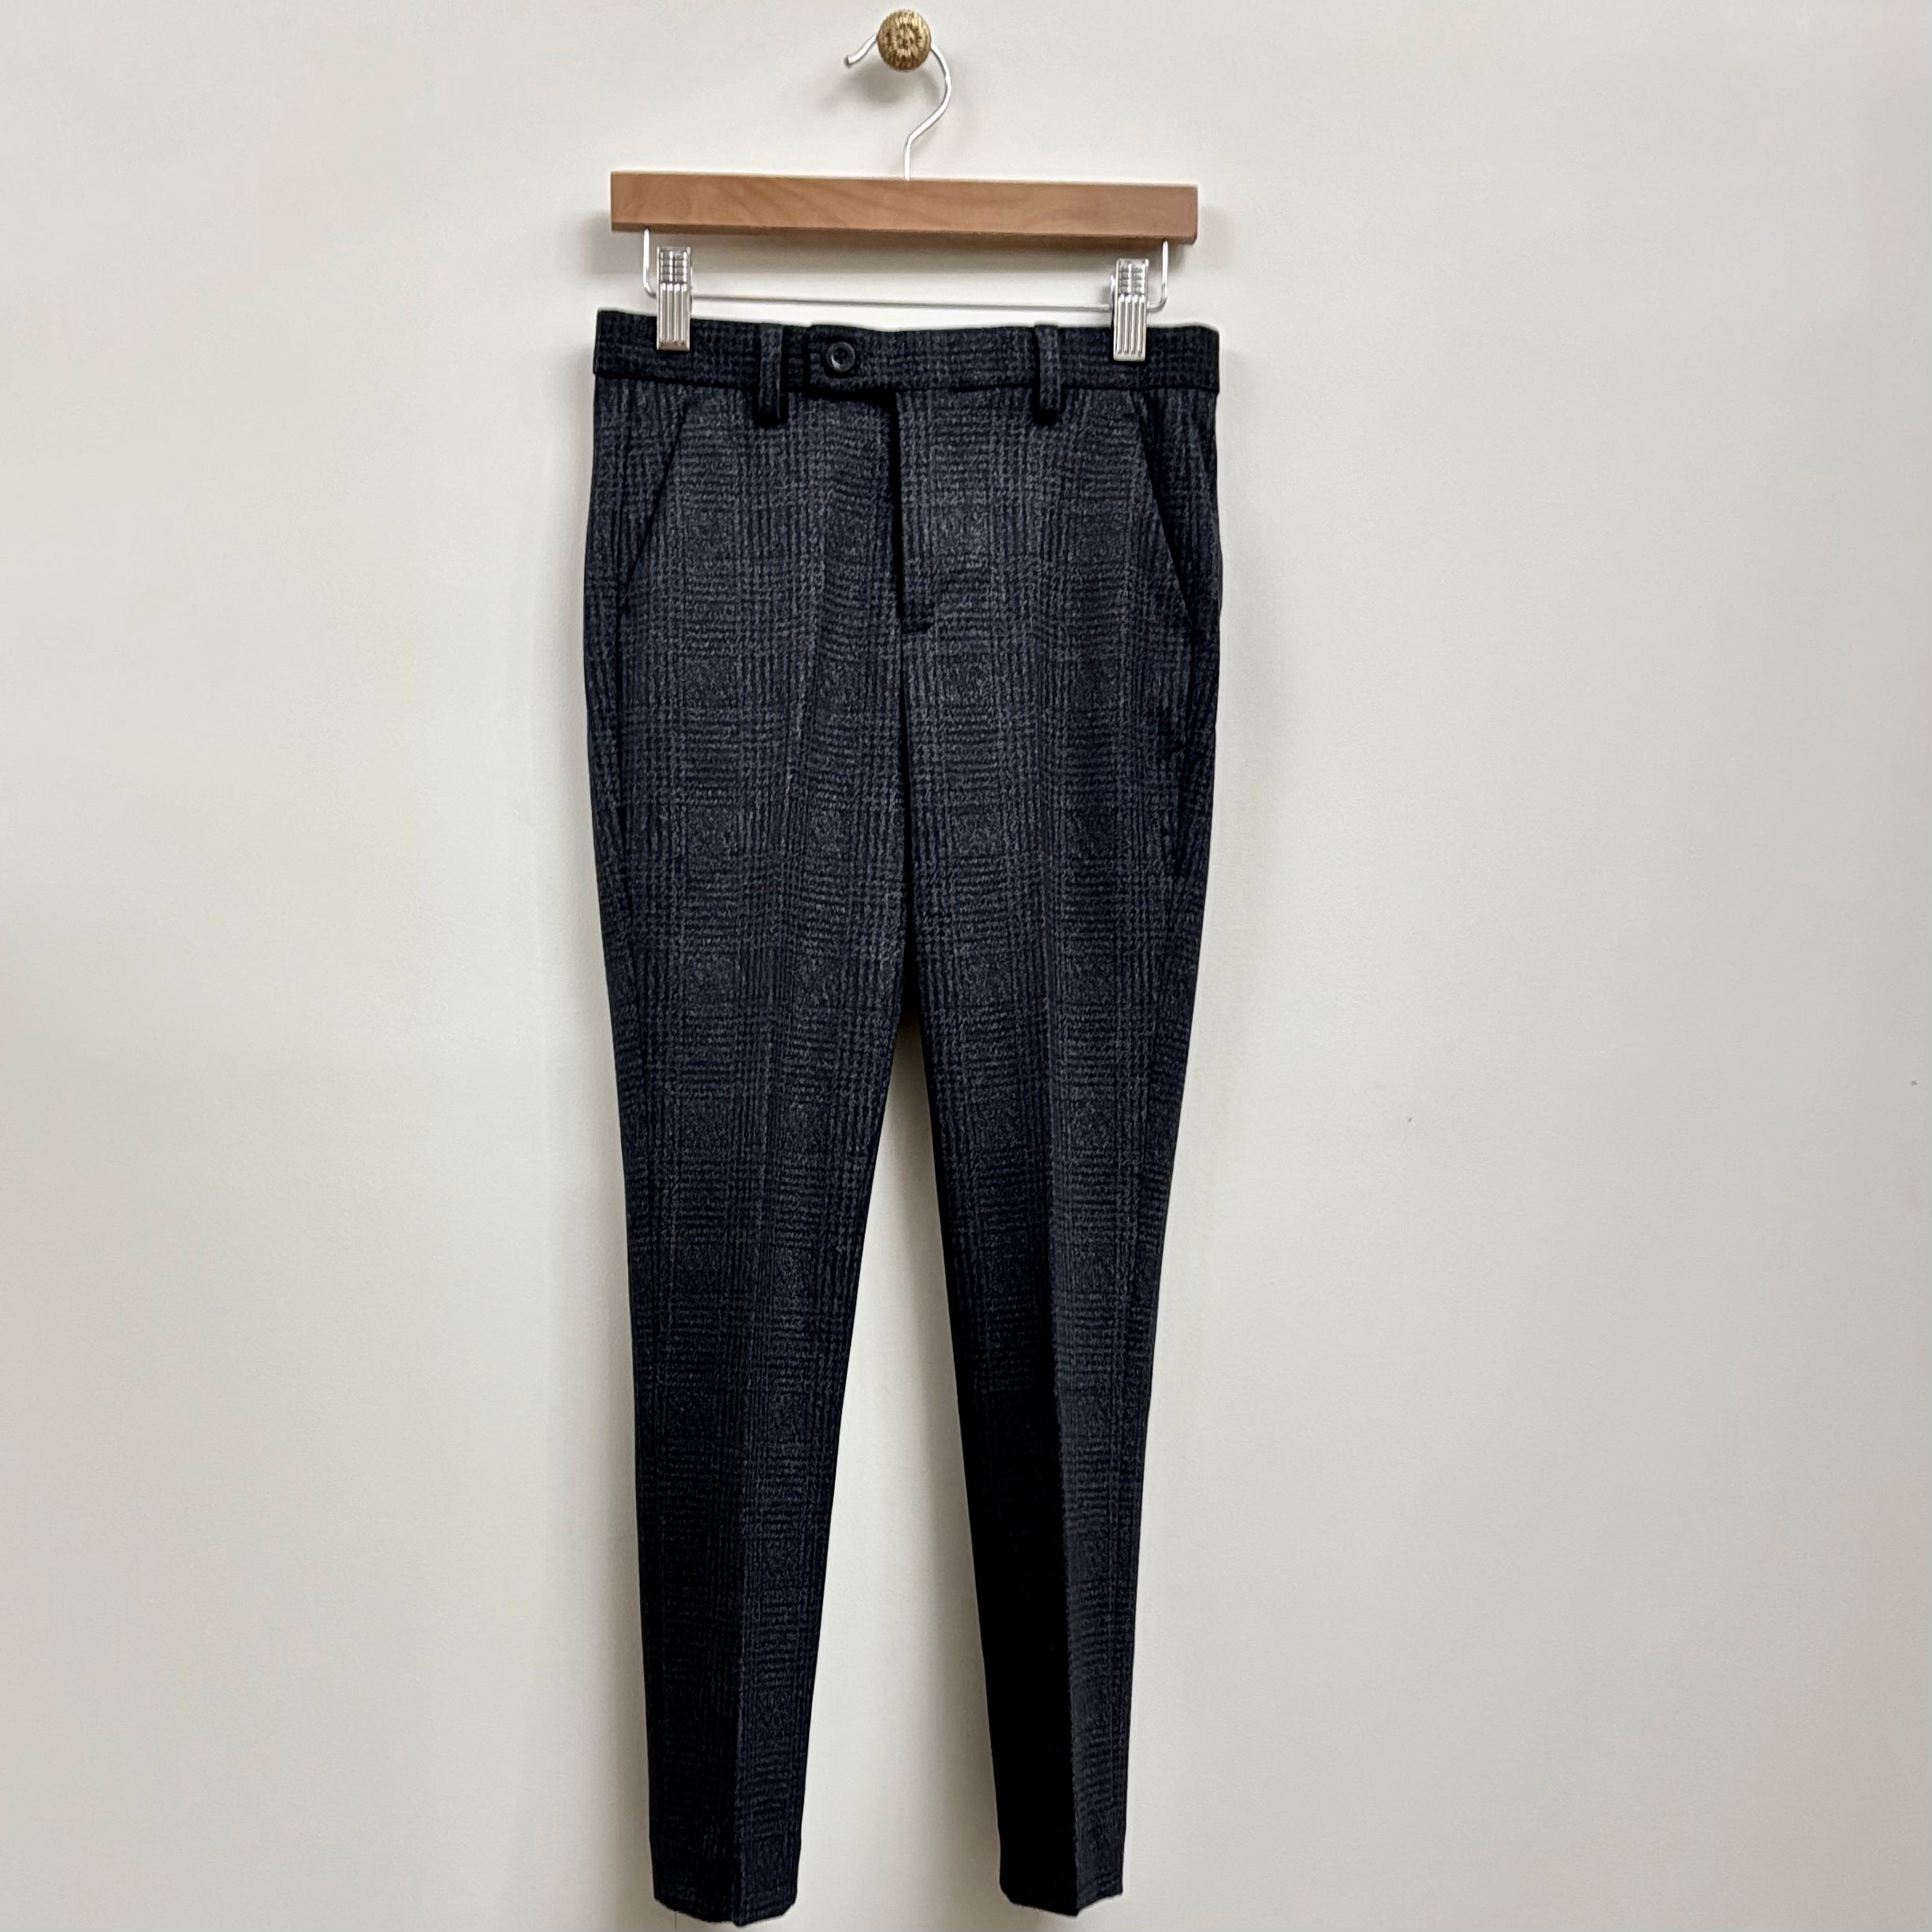 Navy/Grey Plaid Stretch Trouser